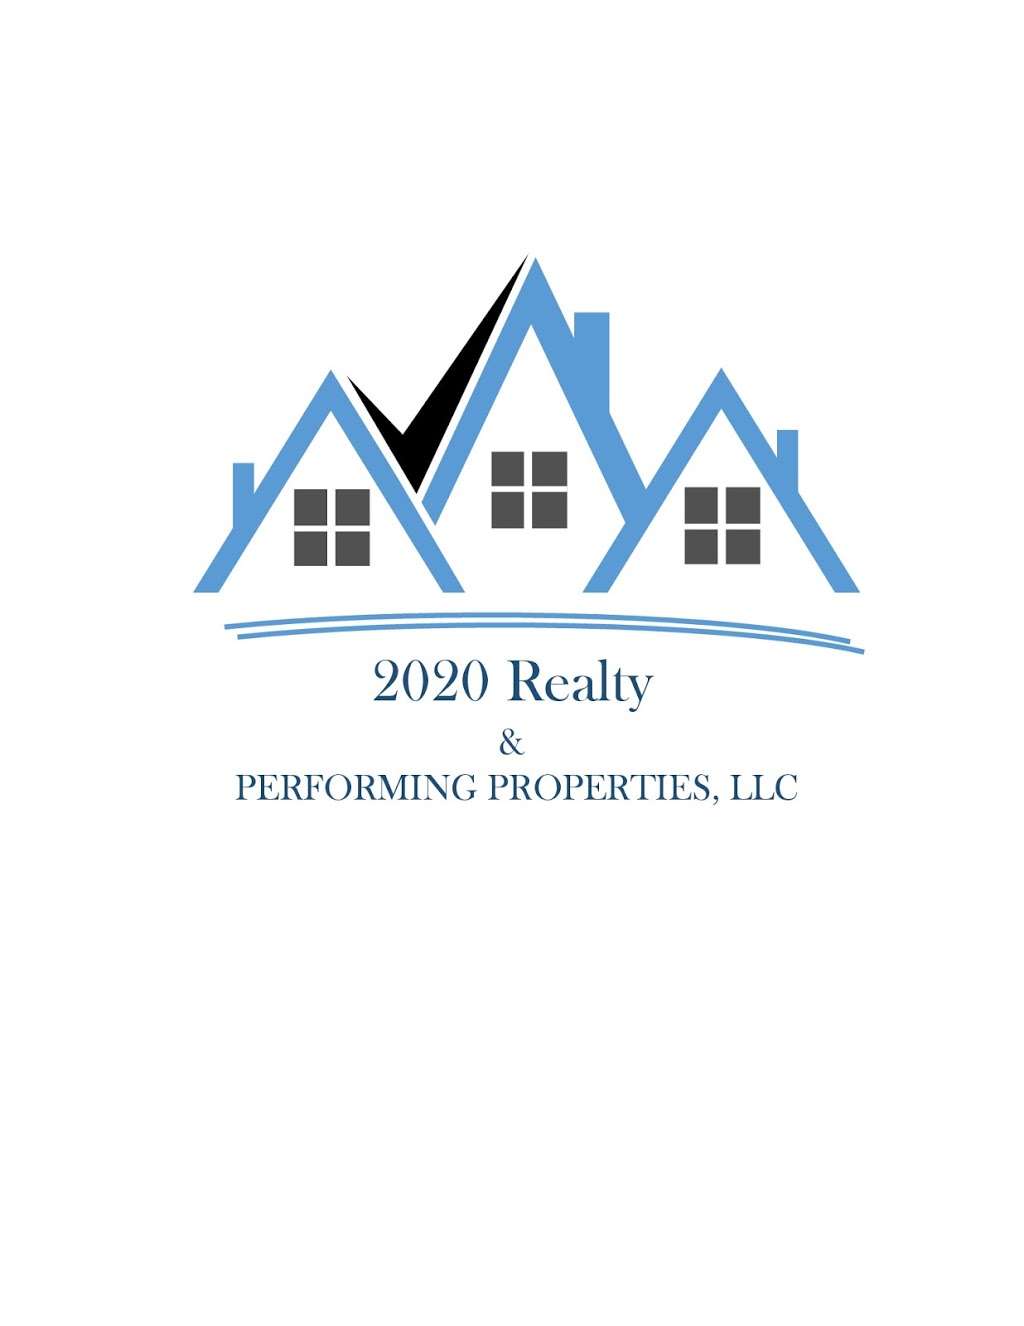 2020 Realty | 2020 Lafayette Blvd D, Fredericksburg, VA 22401 | Phone: (540) 479-3396